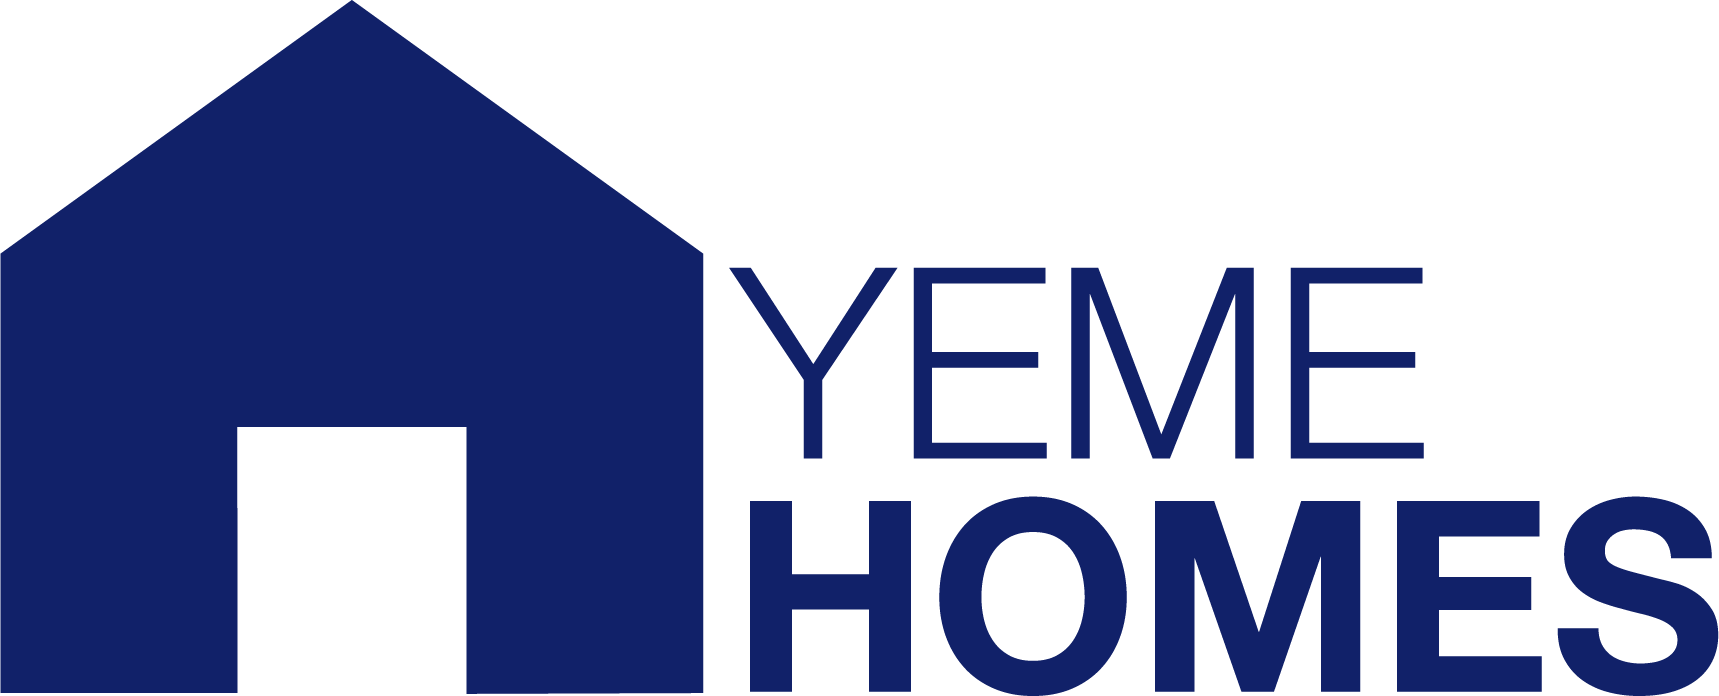 2045HM-DC MA Logo - Yeme Mengistu-clr-final